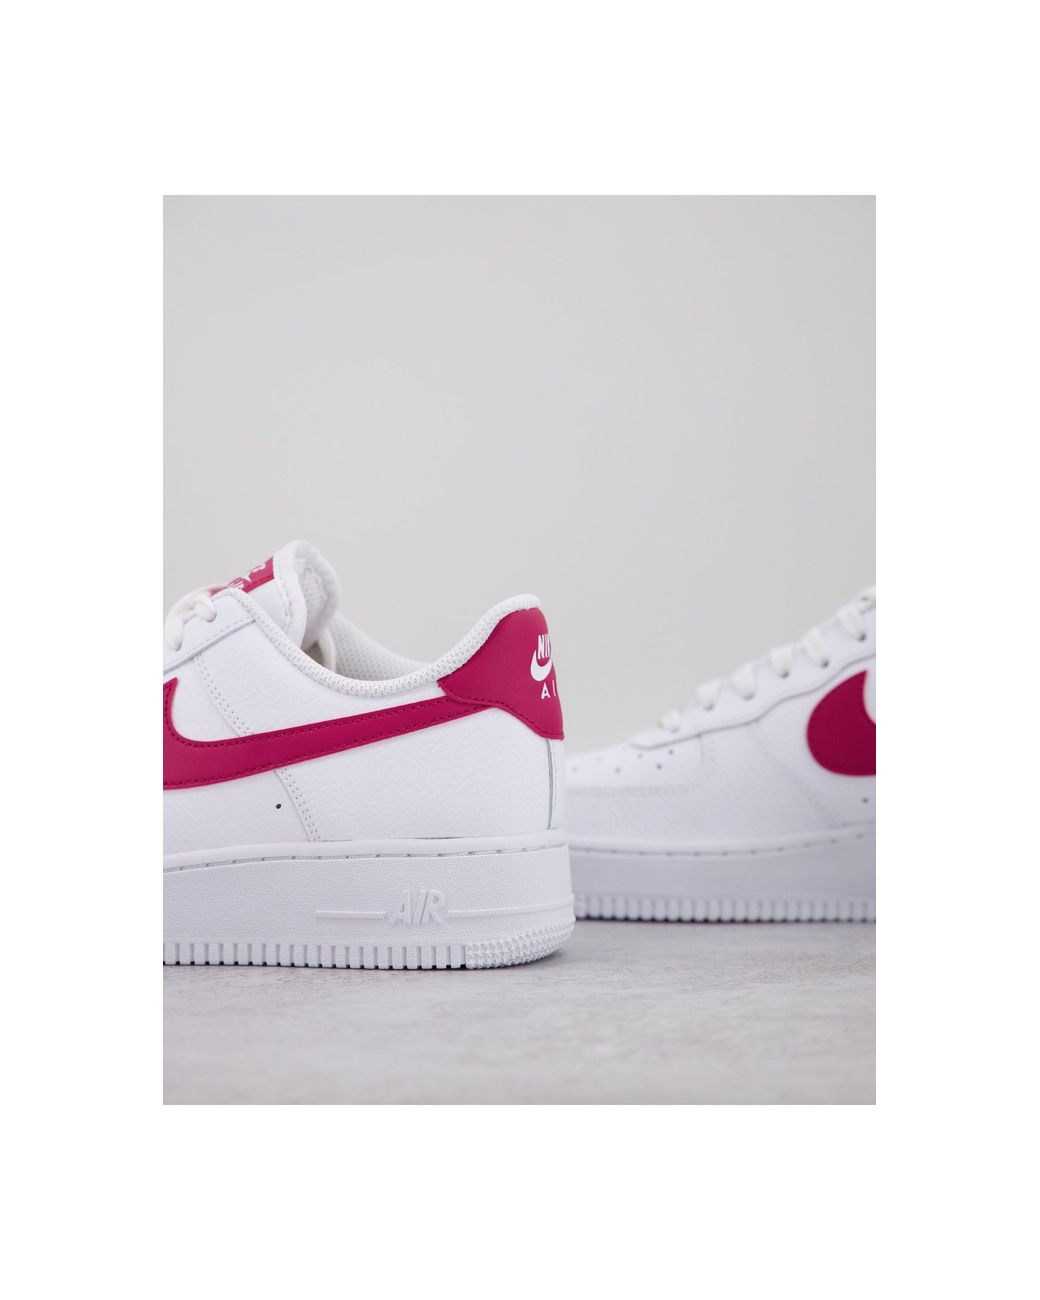 Nike – air force 1 '07 – sneaker und edlem rot in Weiß | Lyst DE